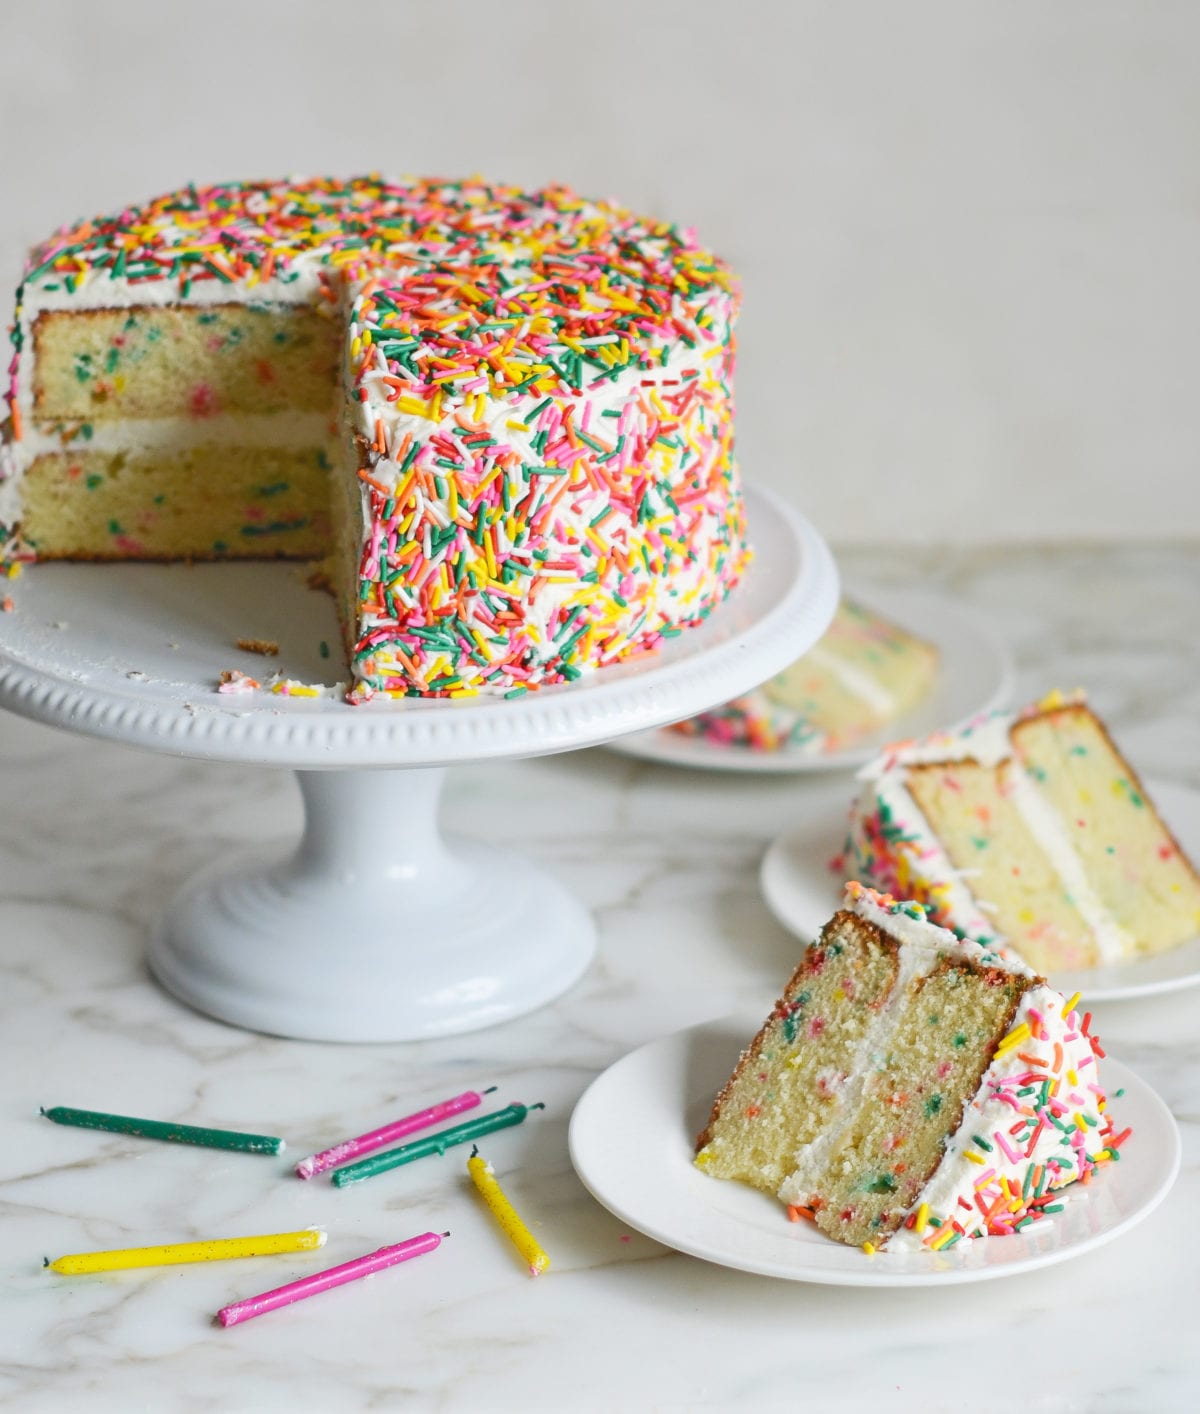 How to Create a Rainbow Unicorn Cake that Will Wow Everyone